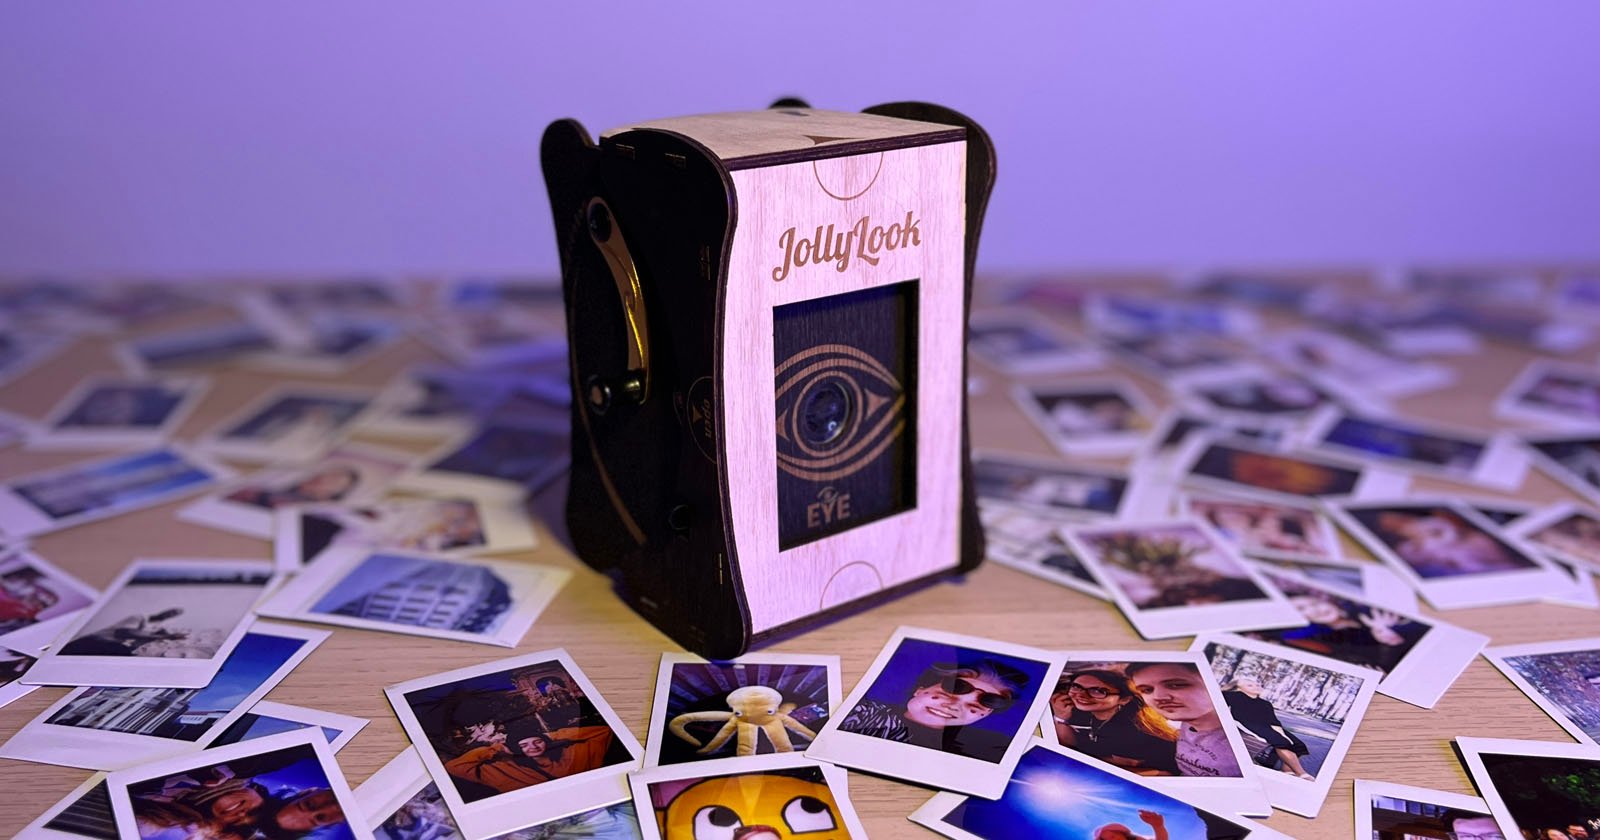  jollylook eye battery-free digital analog instant photo 